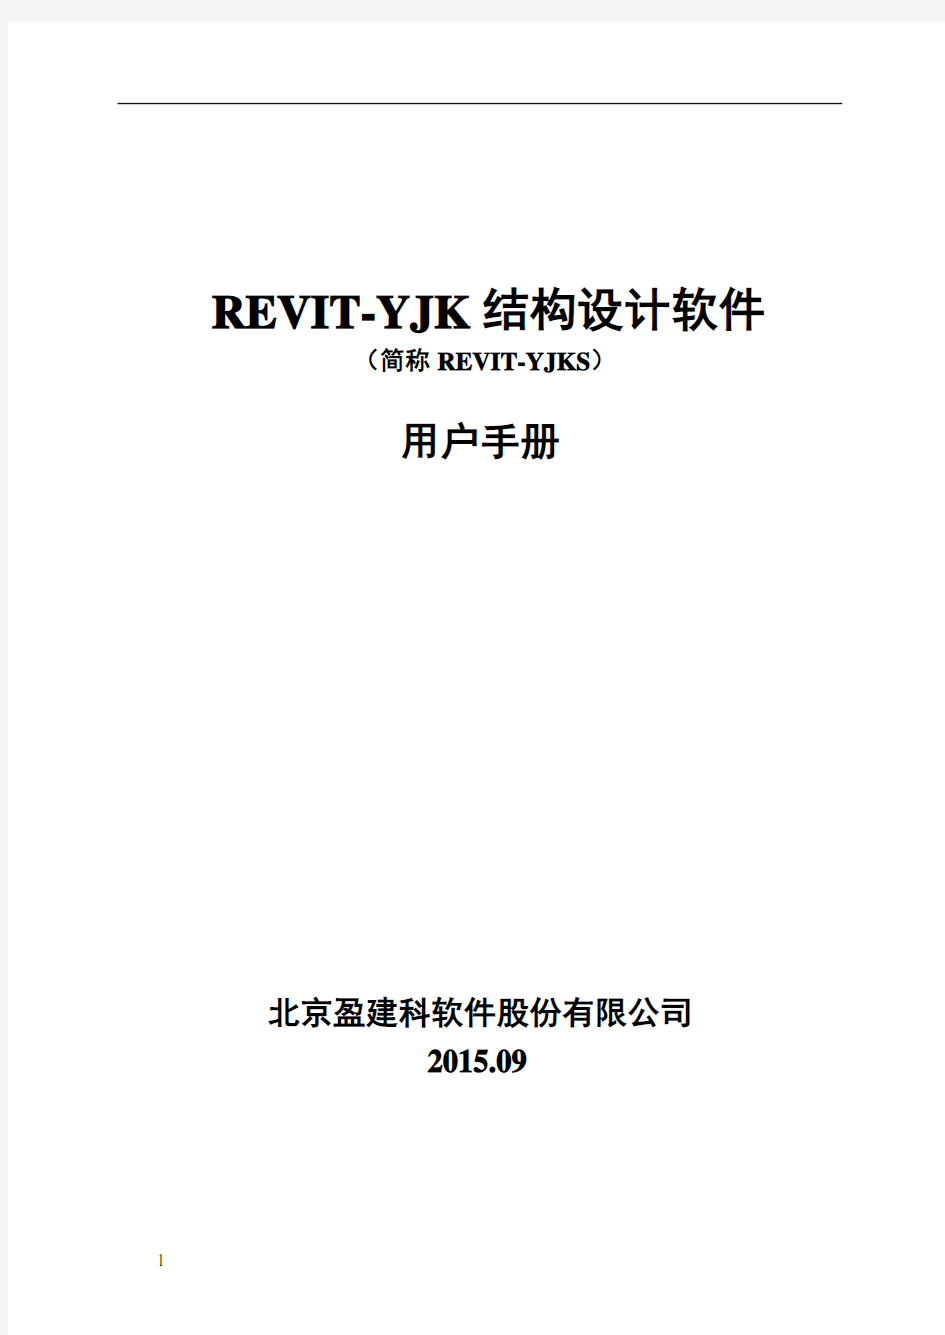 REVIT-YJK结构设计软件REVIT-YJKS--用户手册20150915